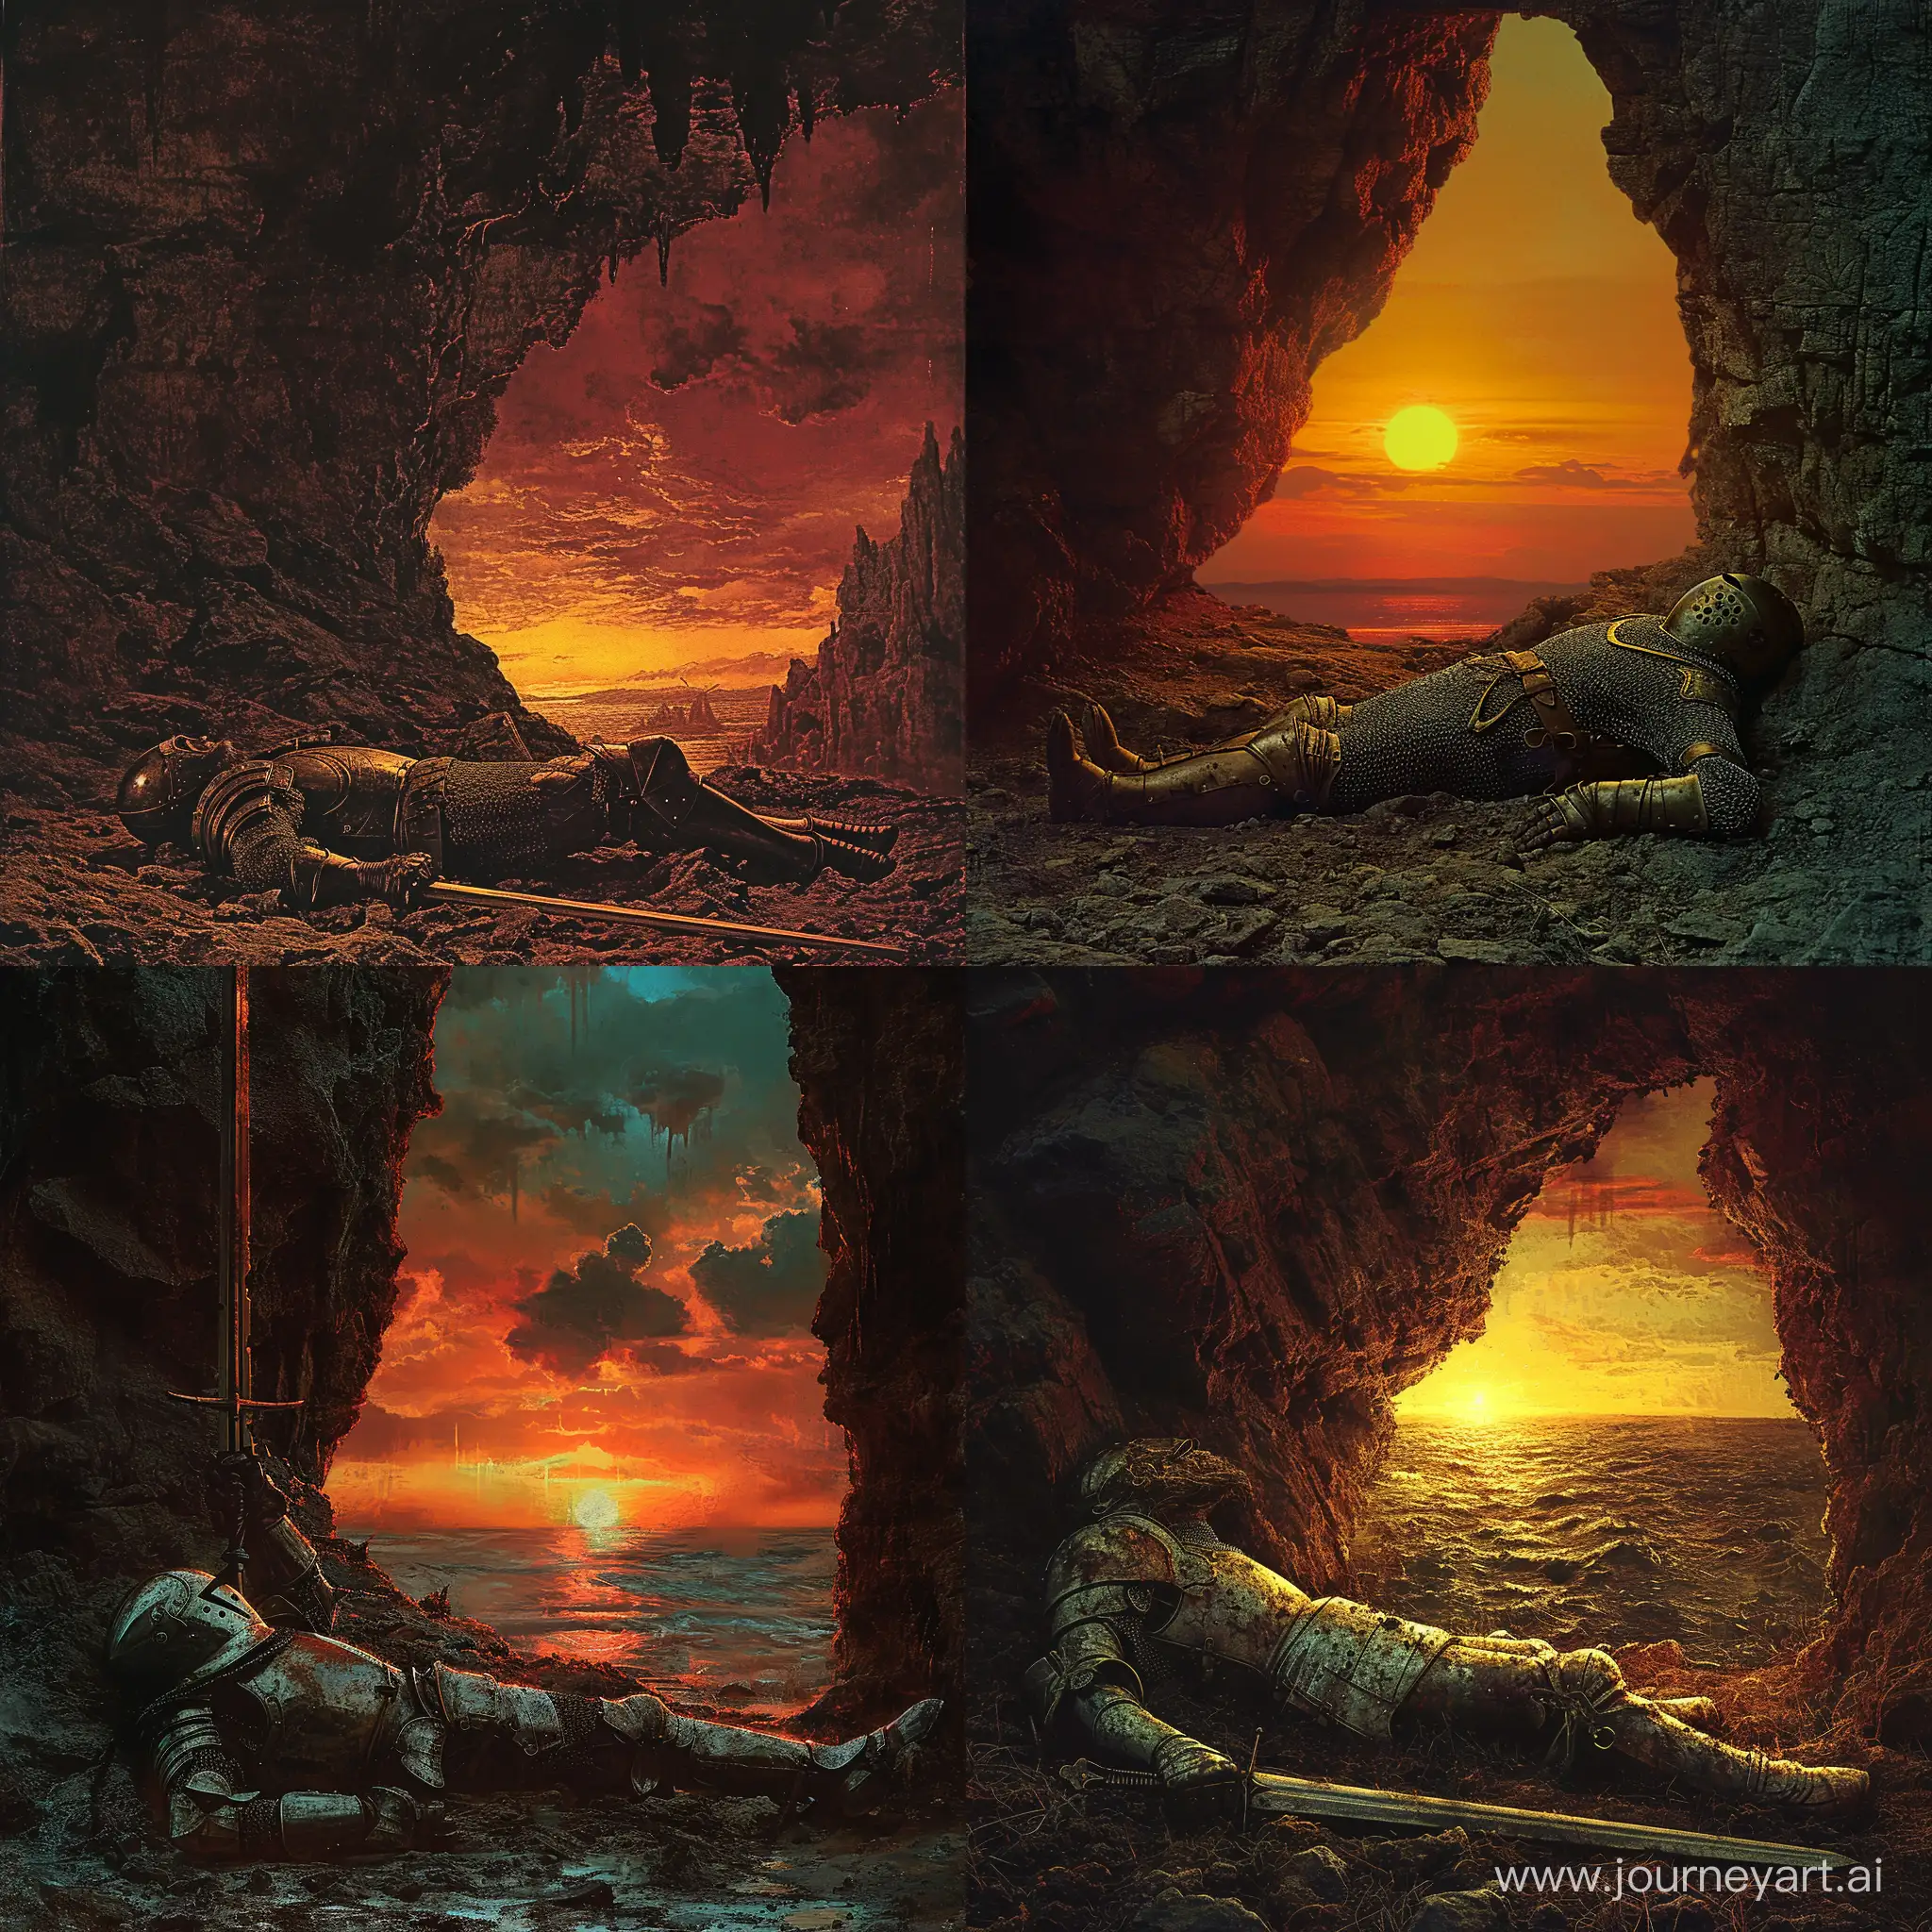 Dying-Knights-Last-Breath-in-Gritty-1970s-Dark-Fantasy-Cave